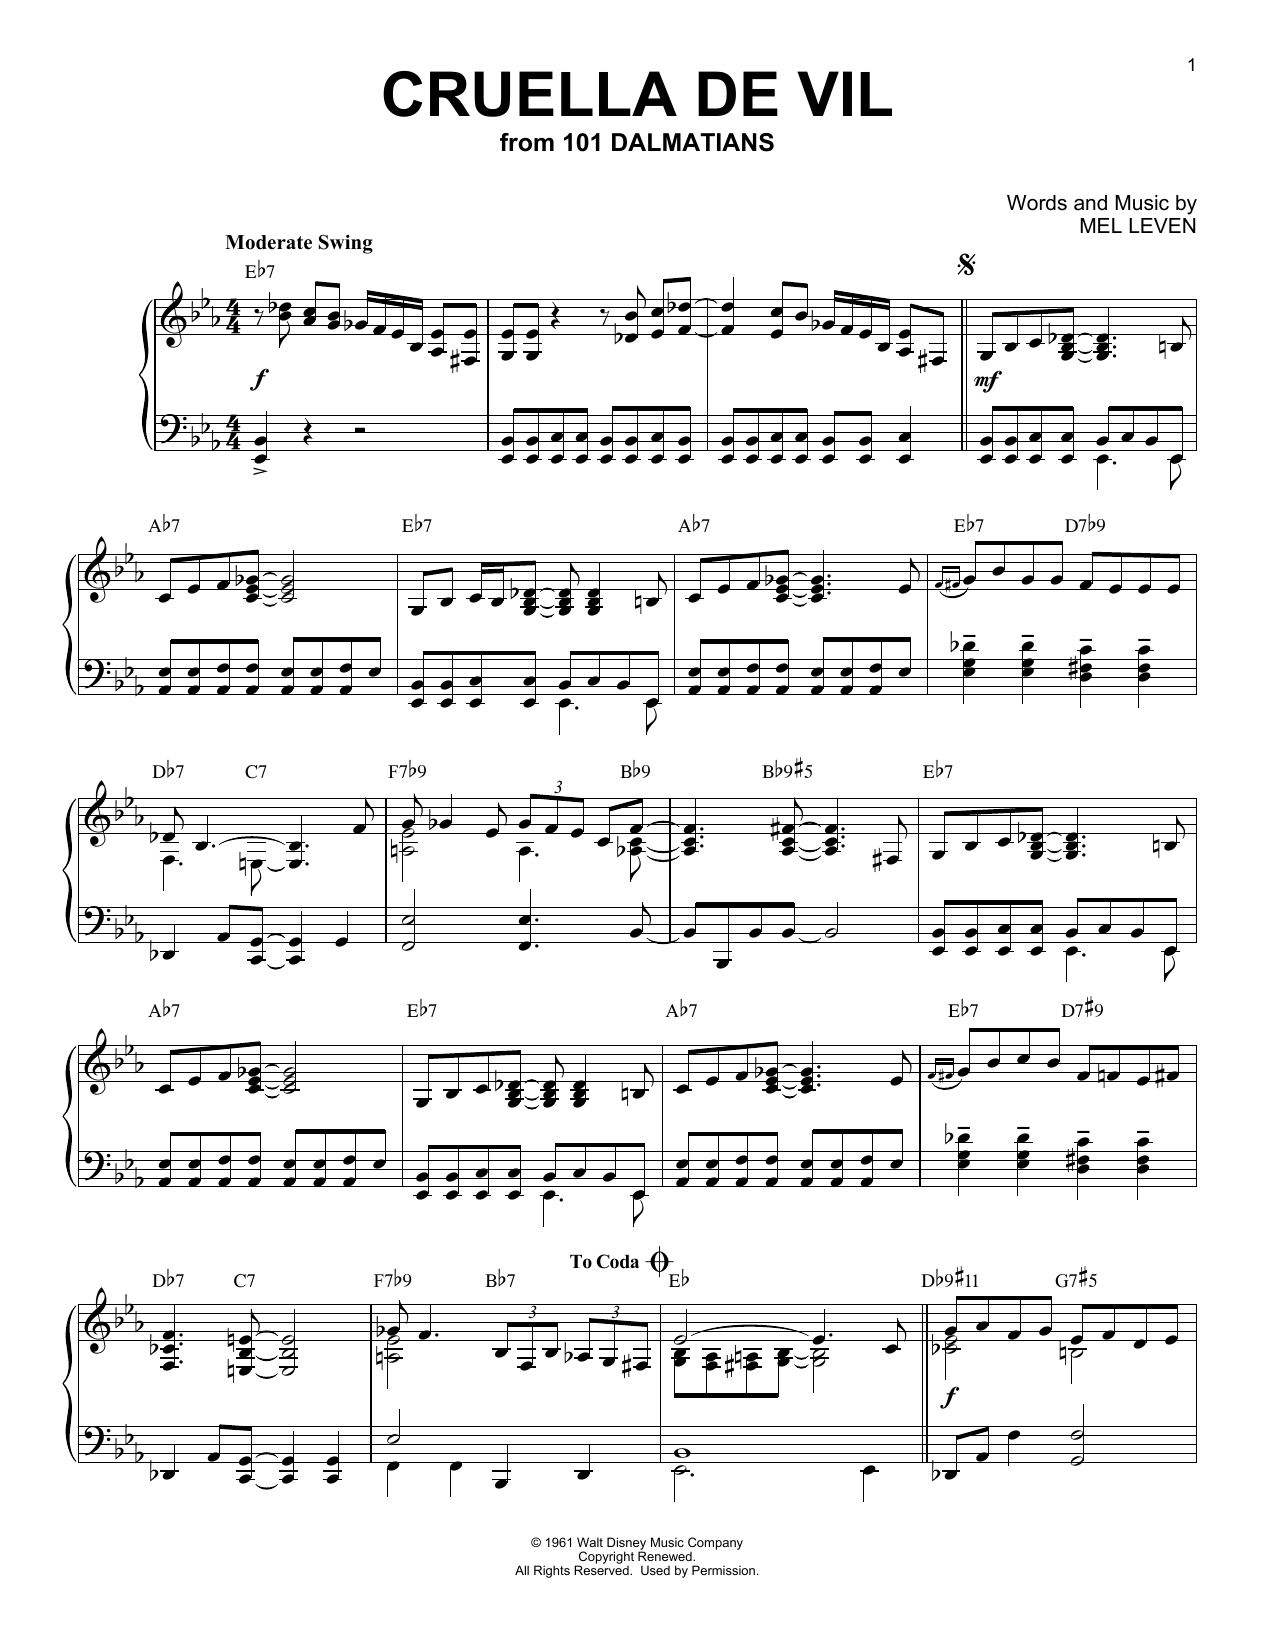 Mel Leven Cruella De Vil [Jazz version] (from 101 Dalmatians) Sheet Music Notes & Chords for Piano - Download or Print PDF